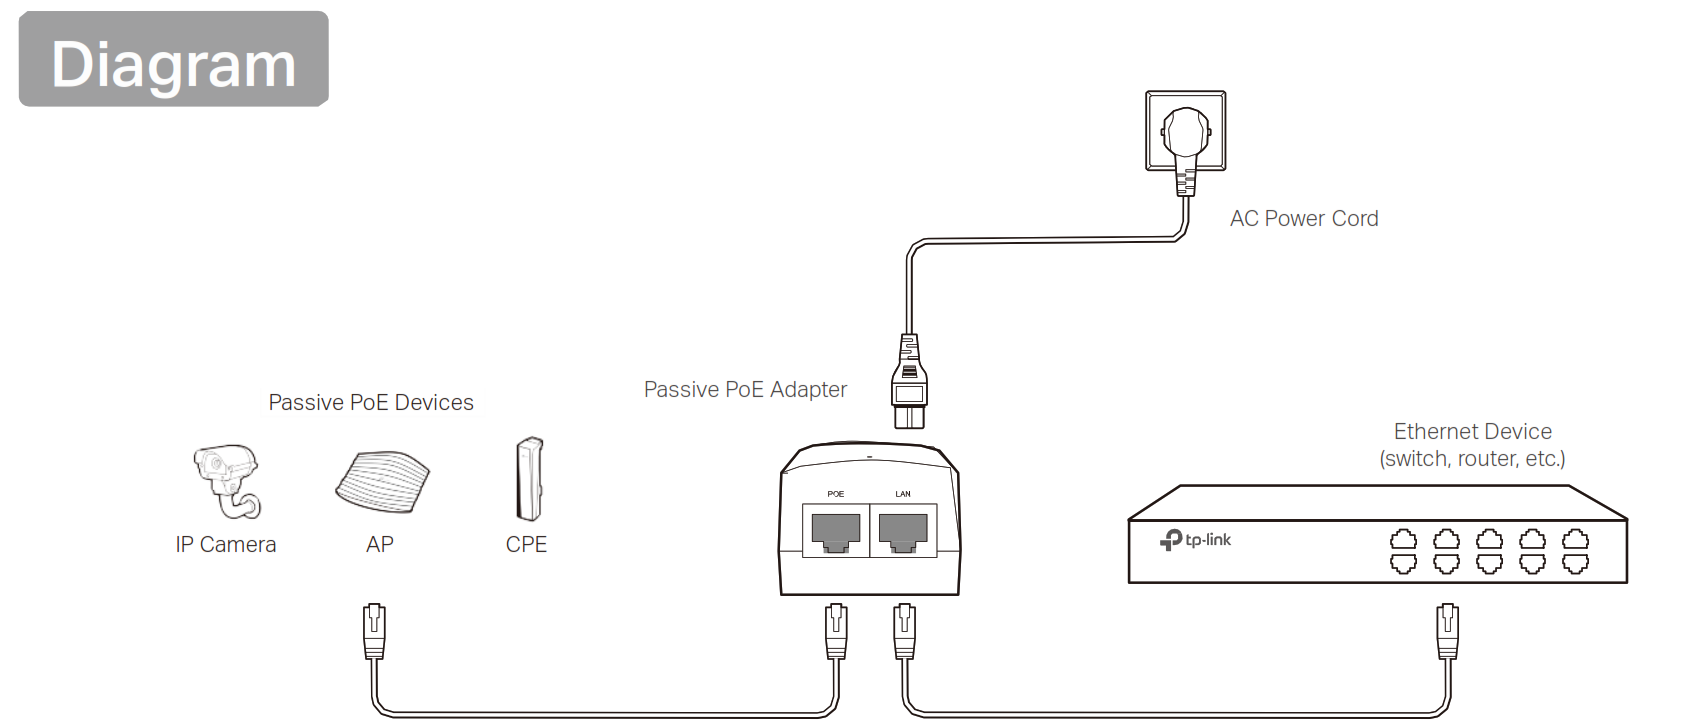 Tp-Link TL-POE4818G Best 48V Passive PoE Adapter | RxTx